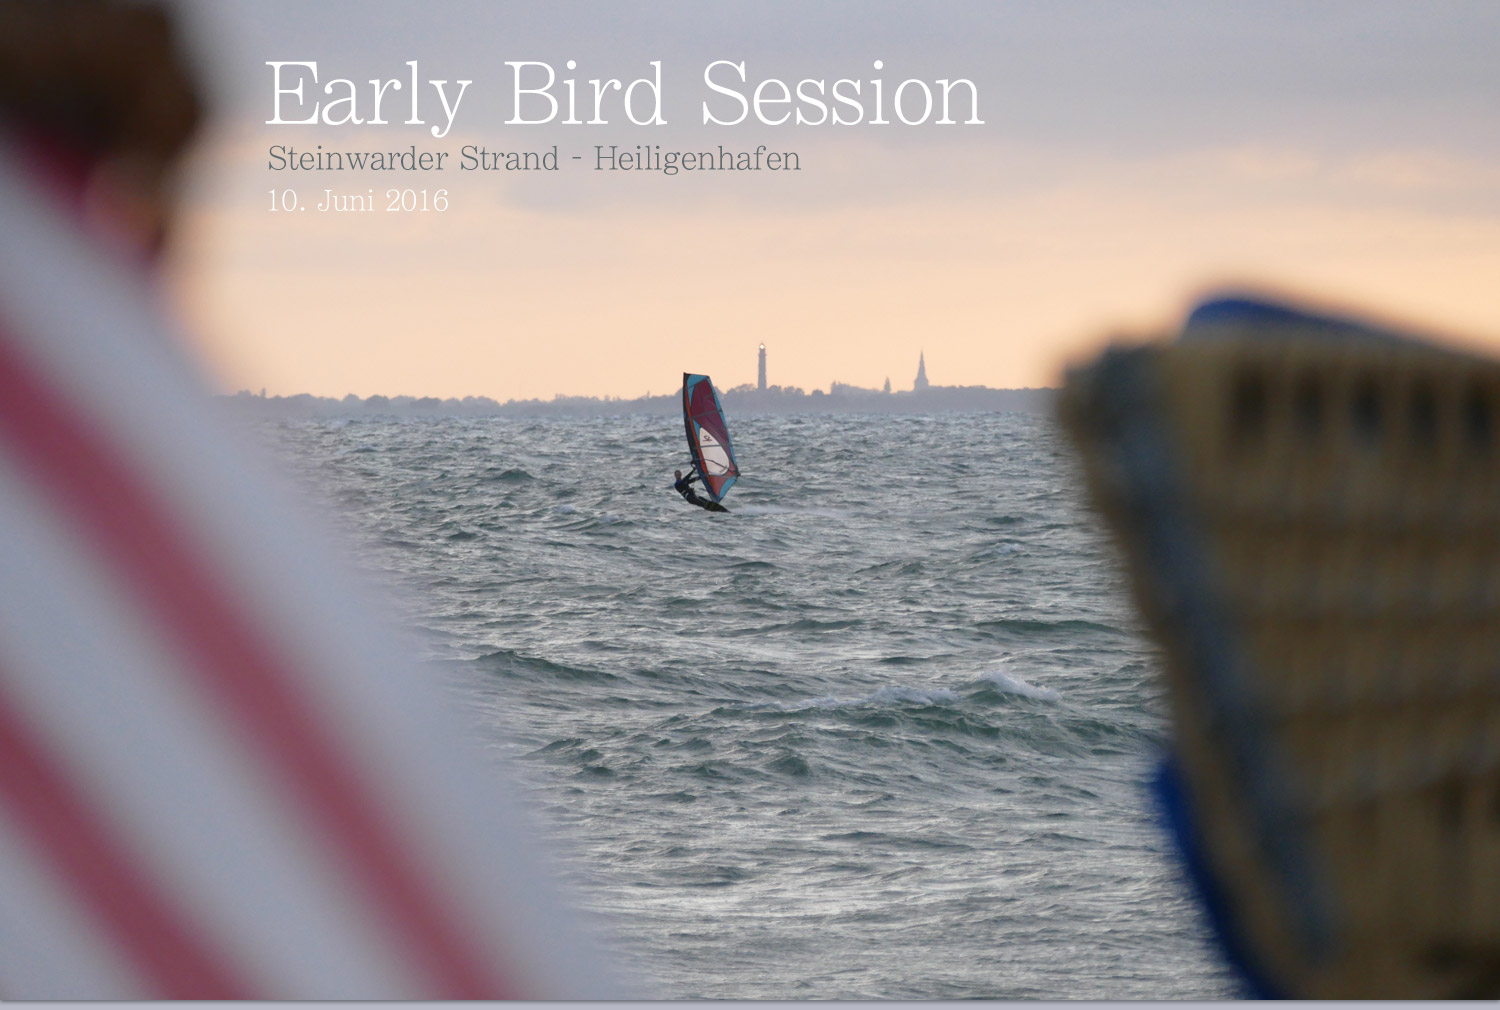 Early Bird Session in Heiligenhafen - 10. Juni 2016